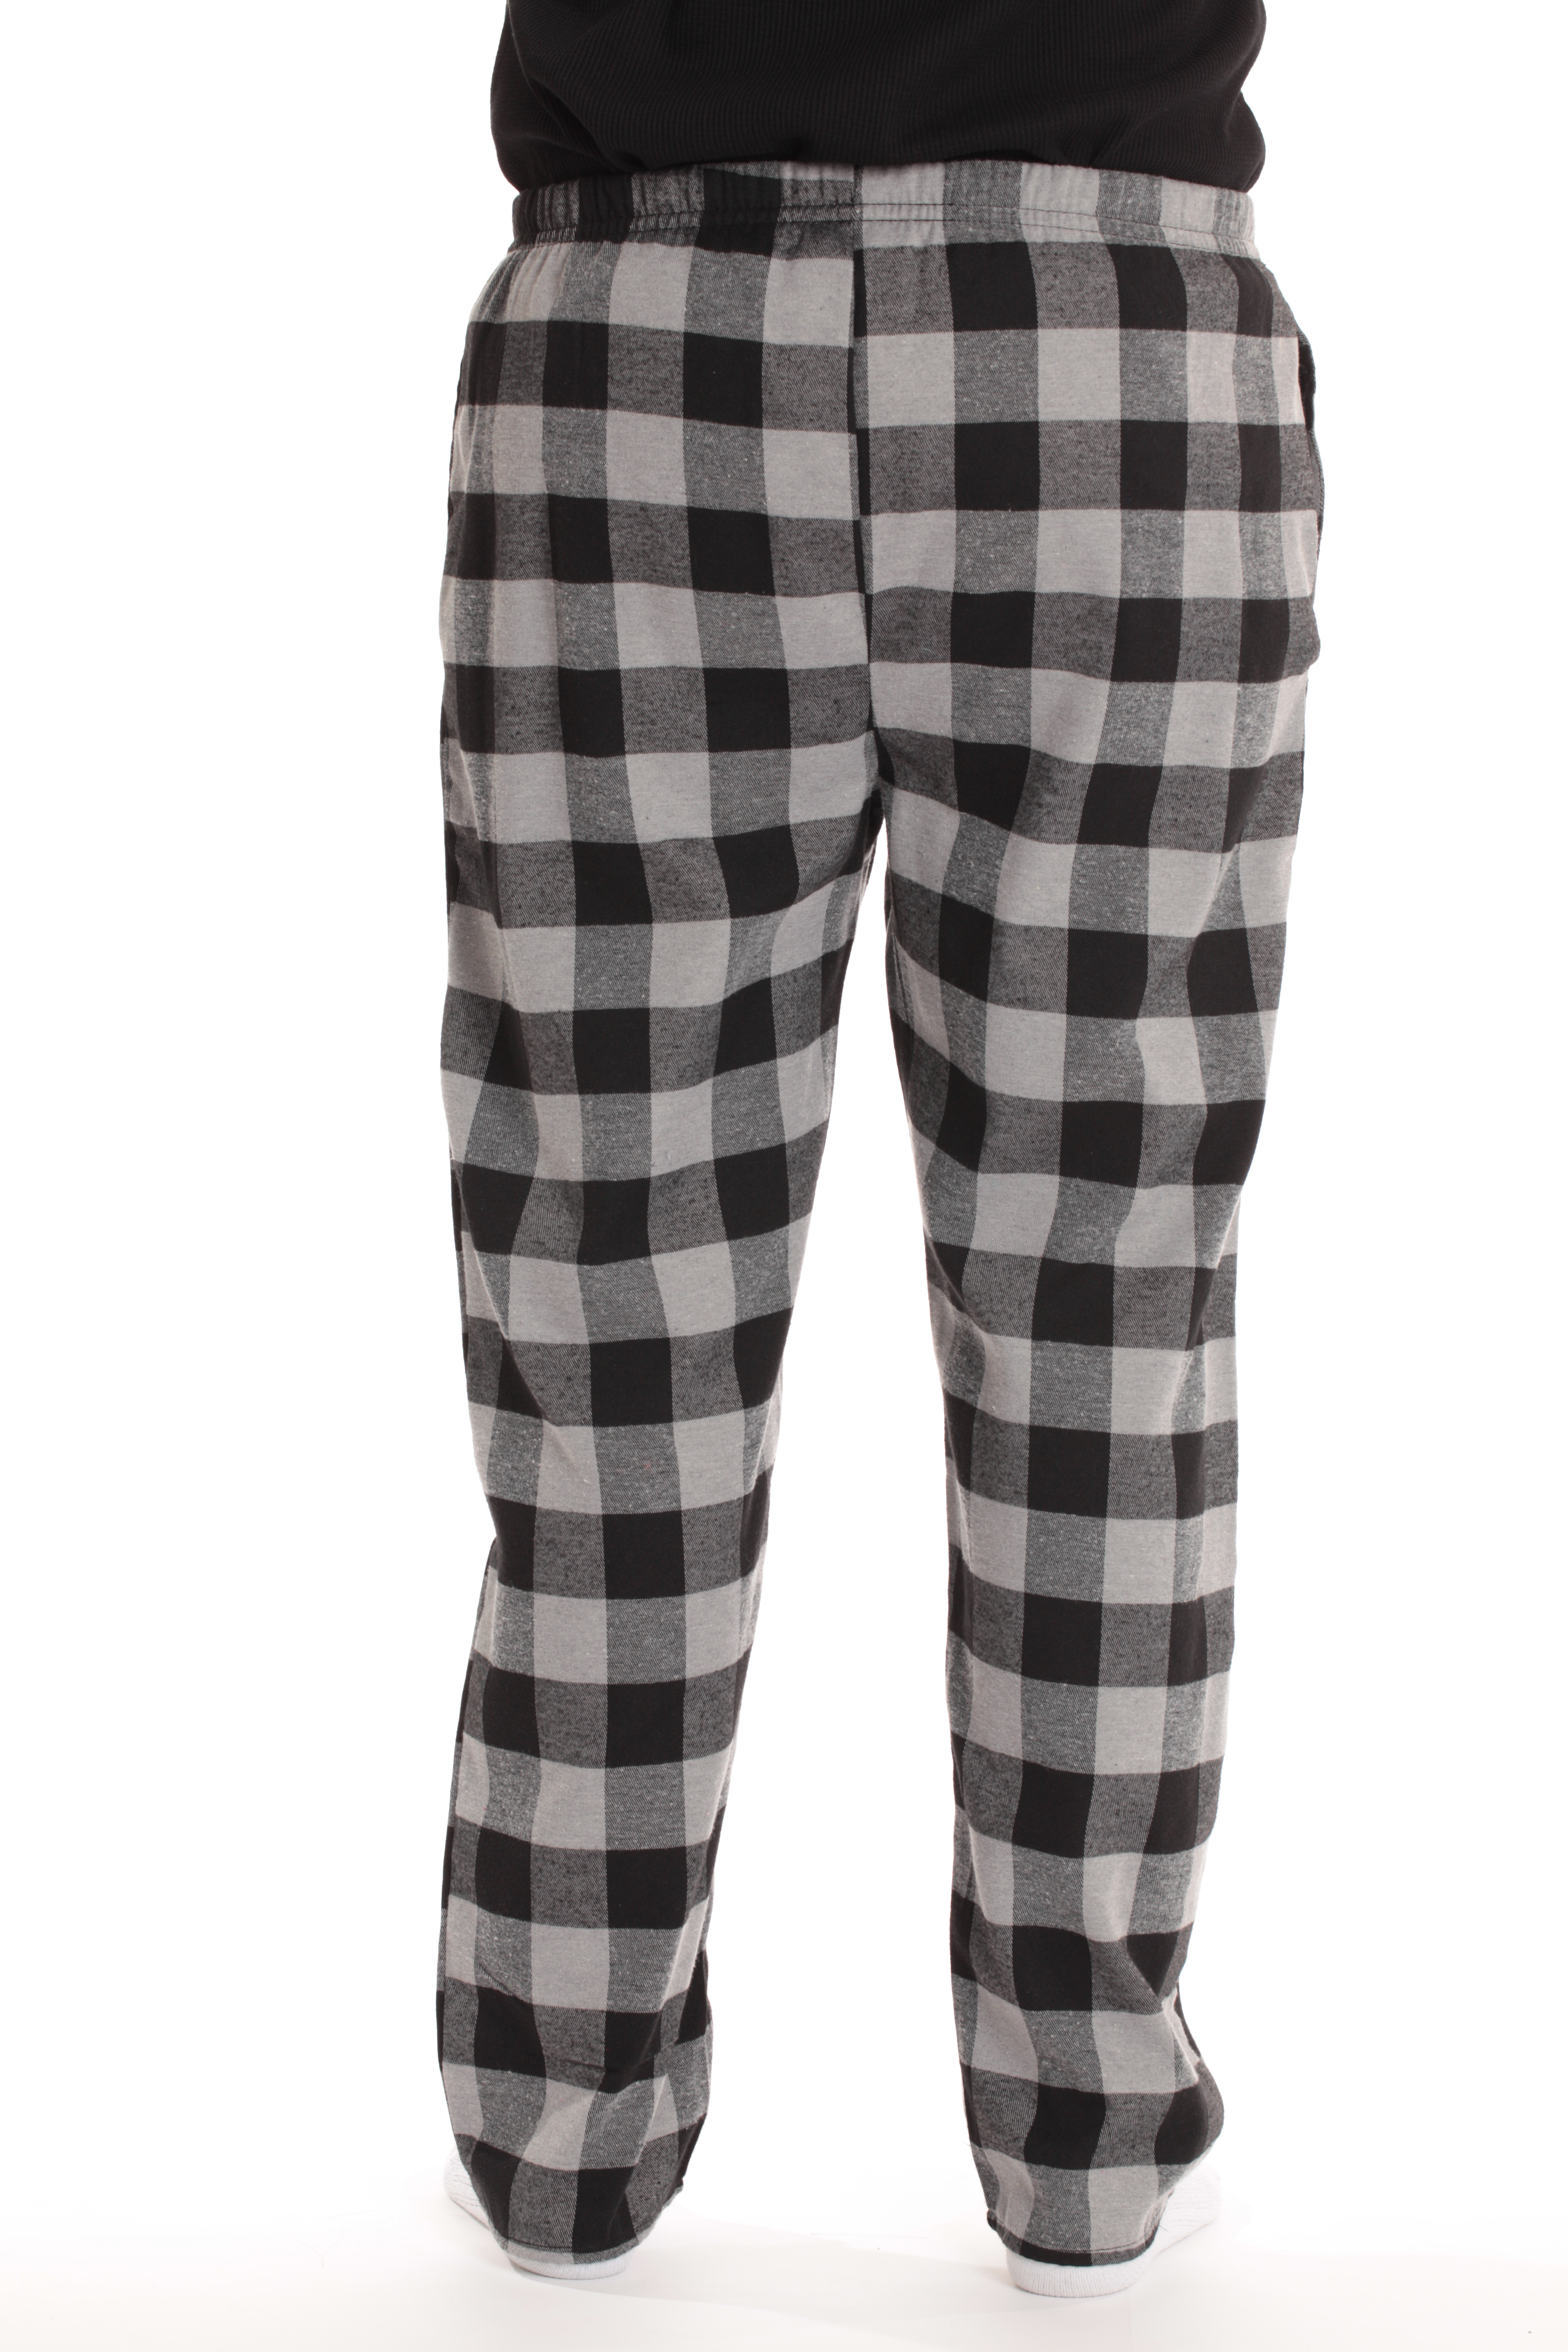 Plaid Pajama Pants for Men #followme Men's Flannel Pajamas 